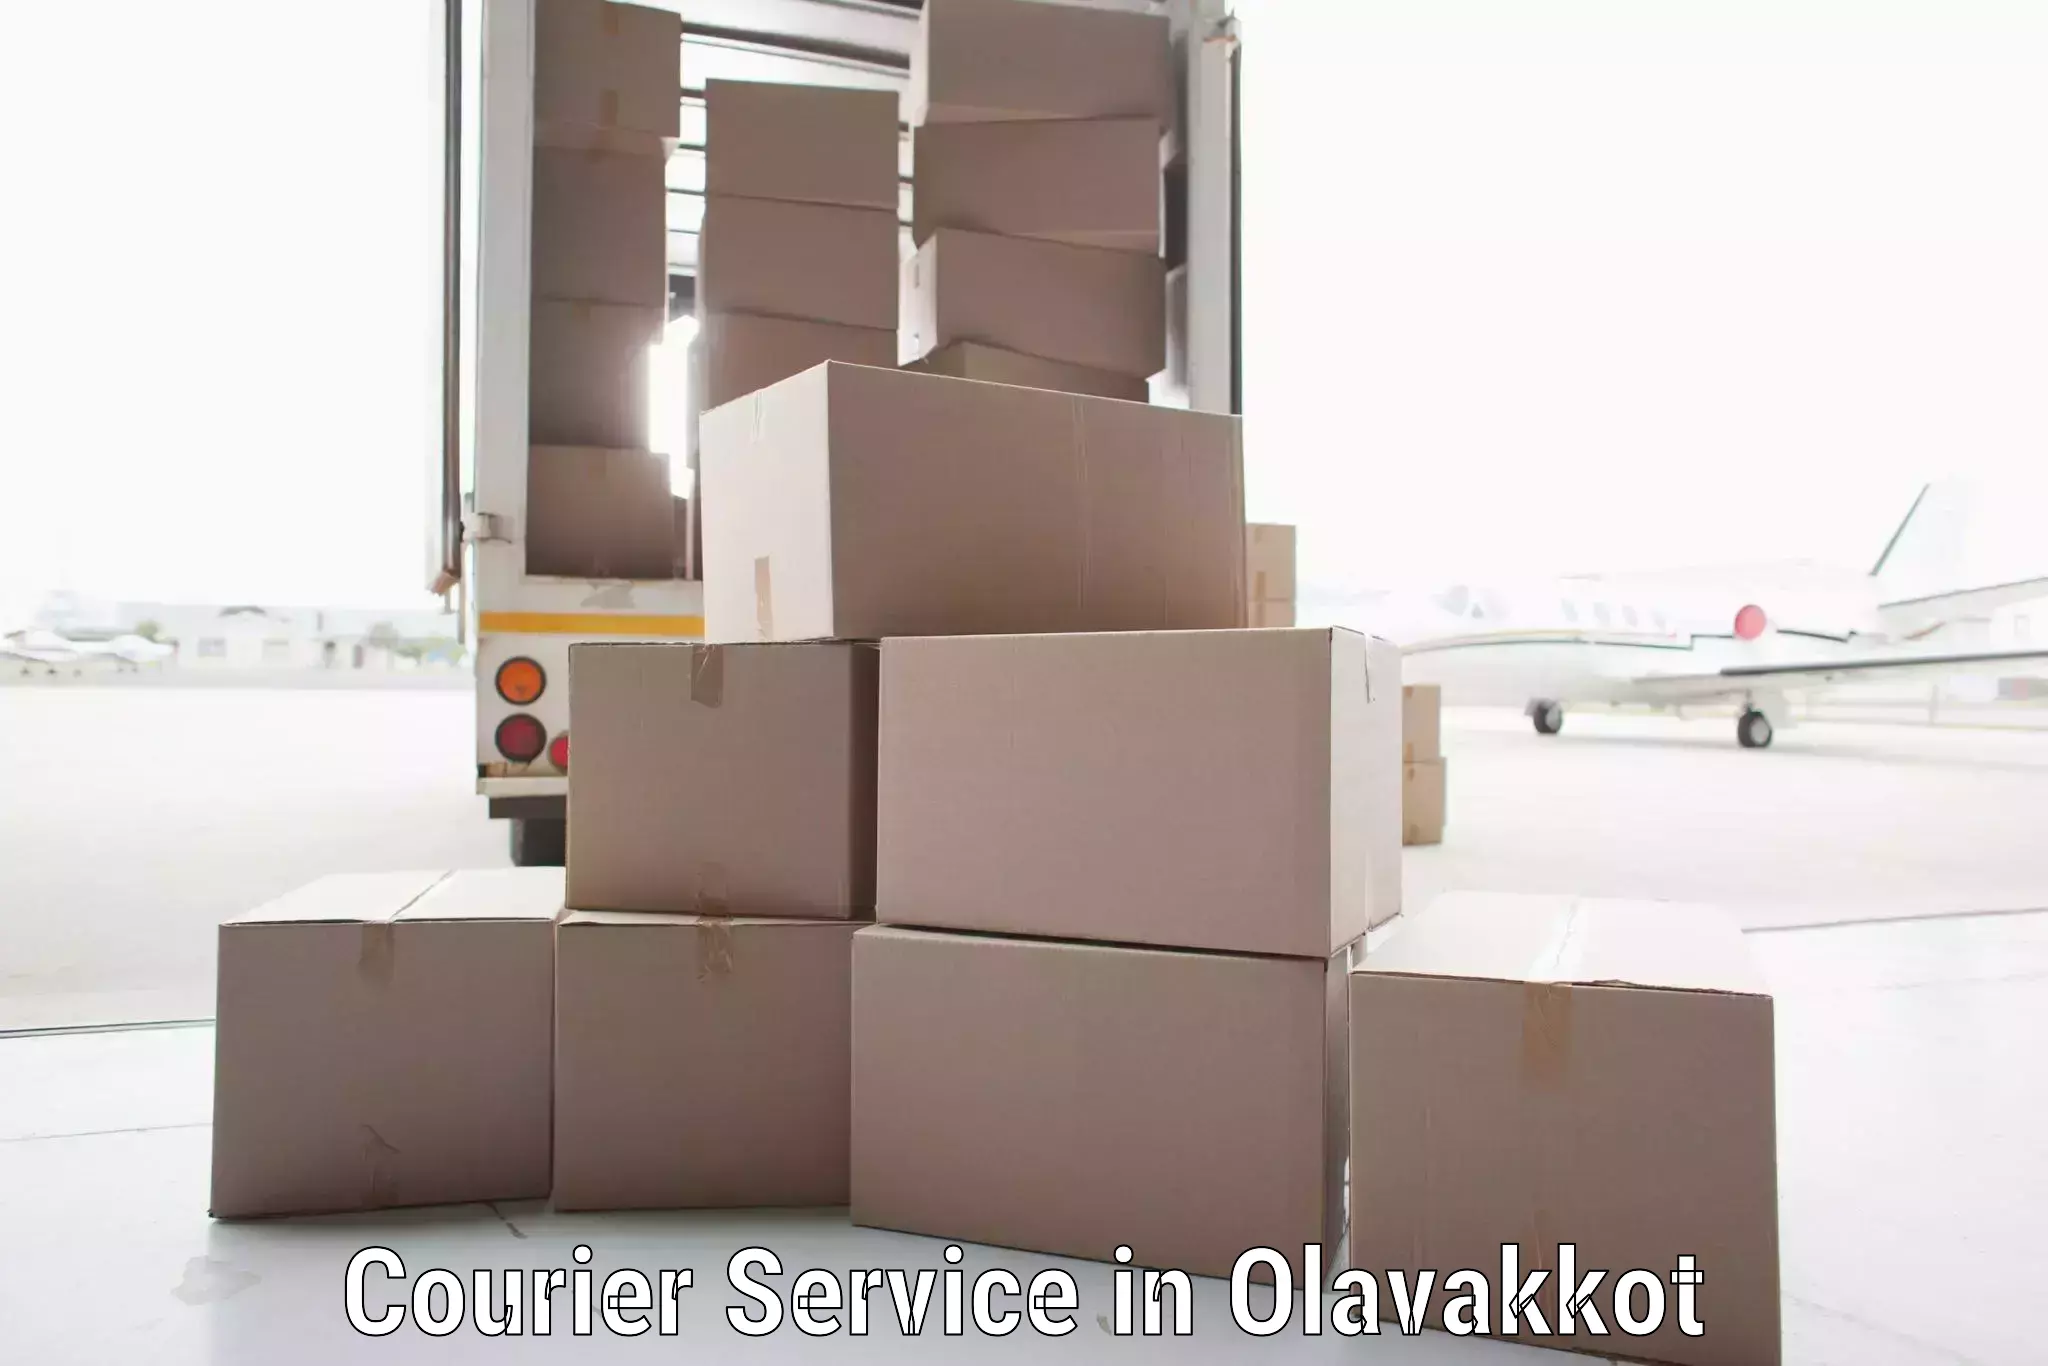 Doorstep parcel pickup in Olavakkot